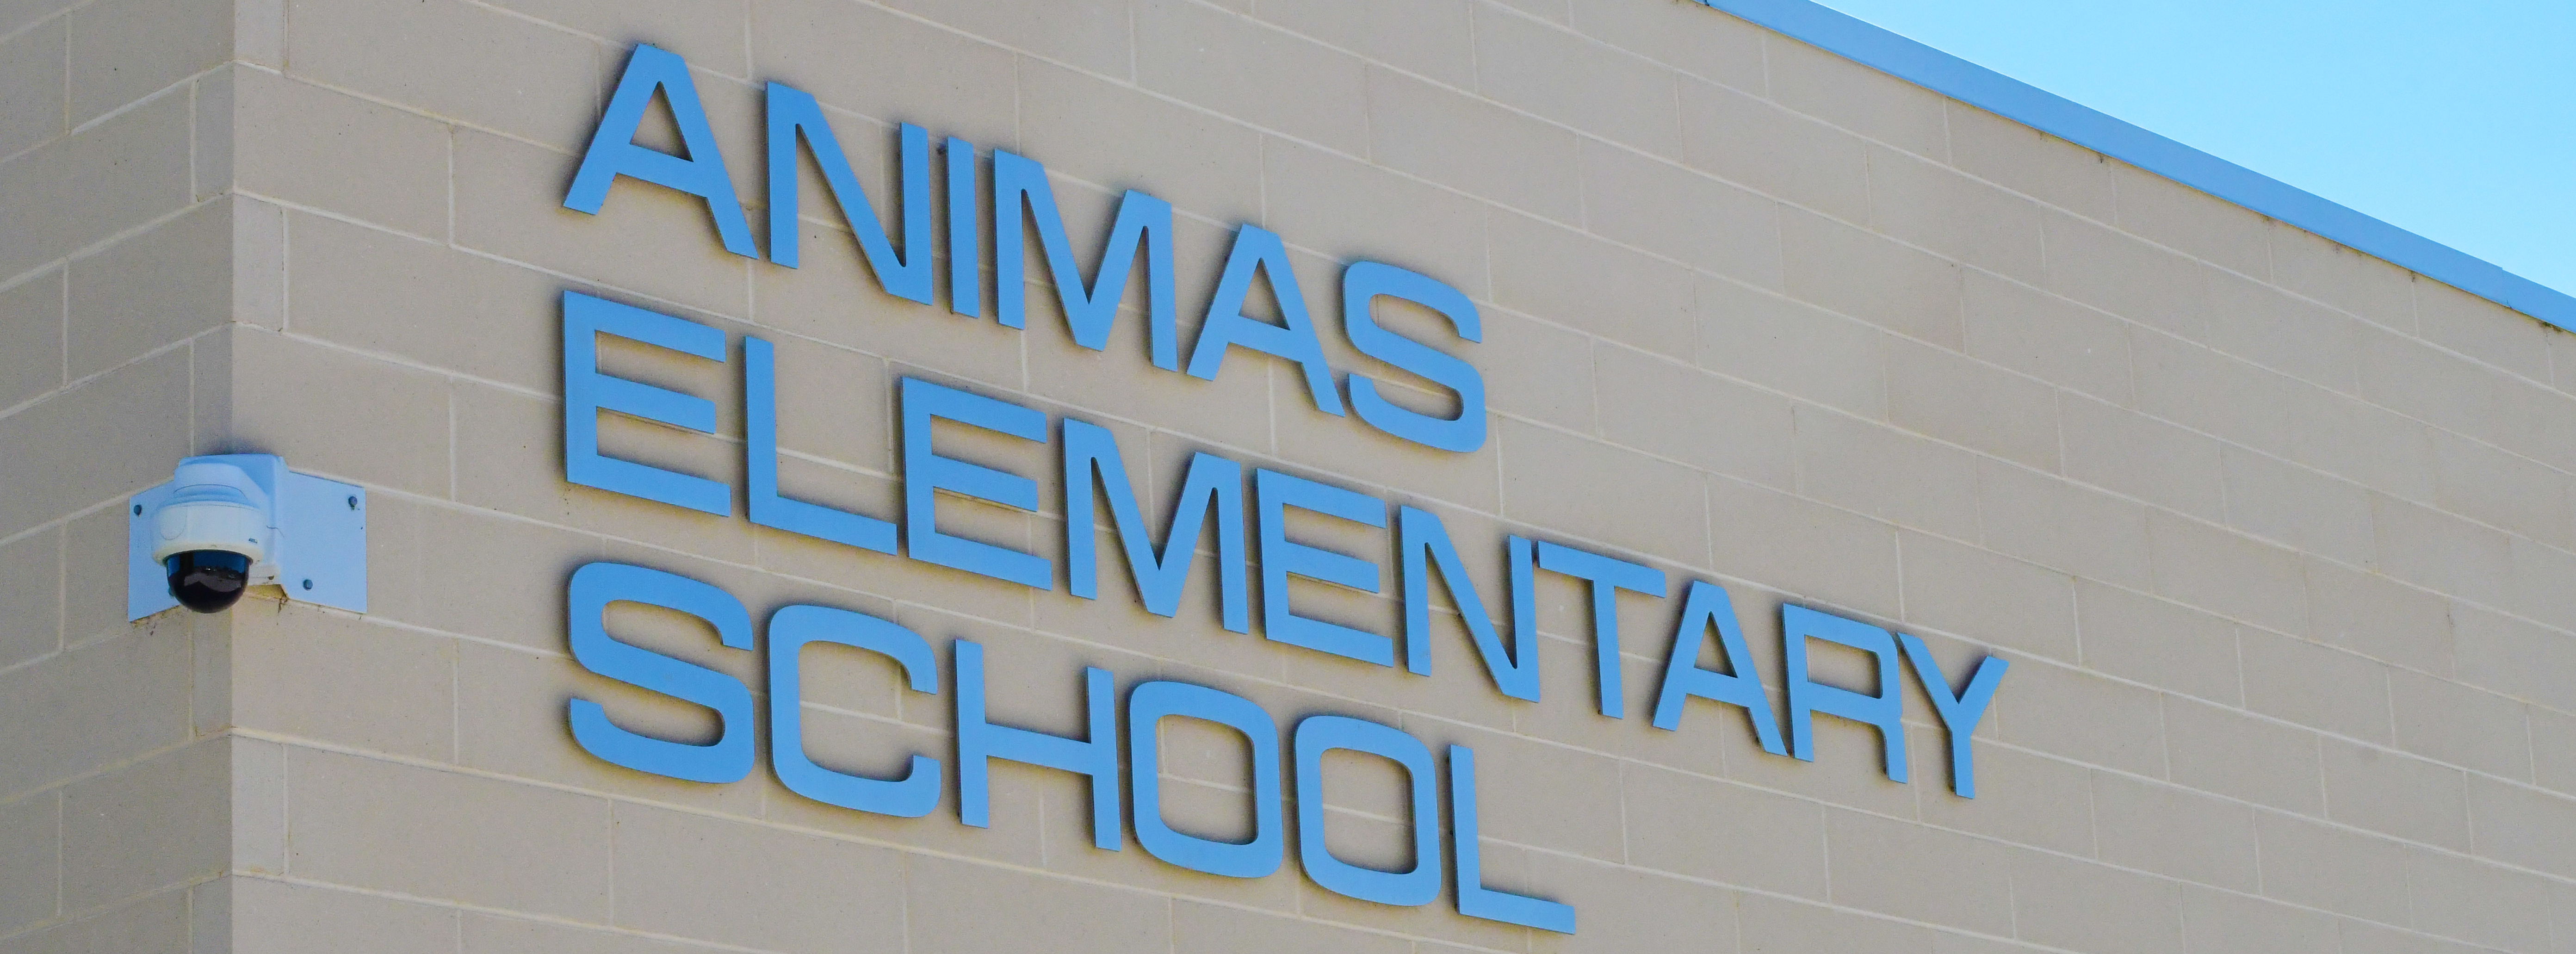 Animas Elementary